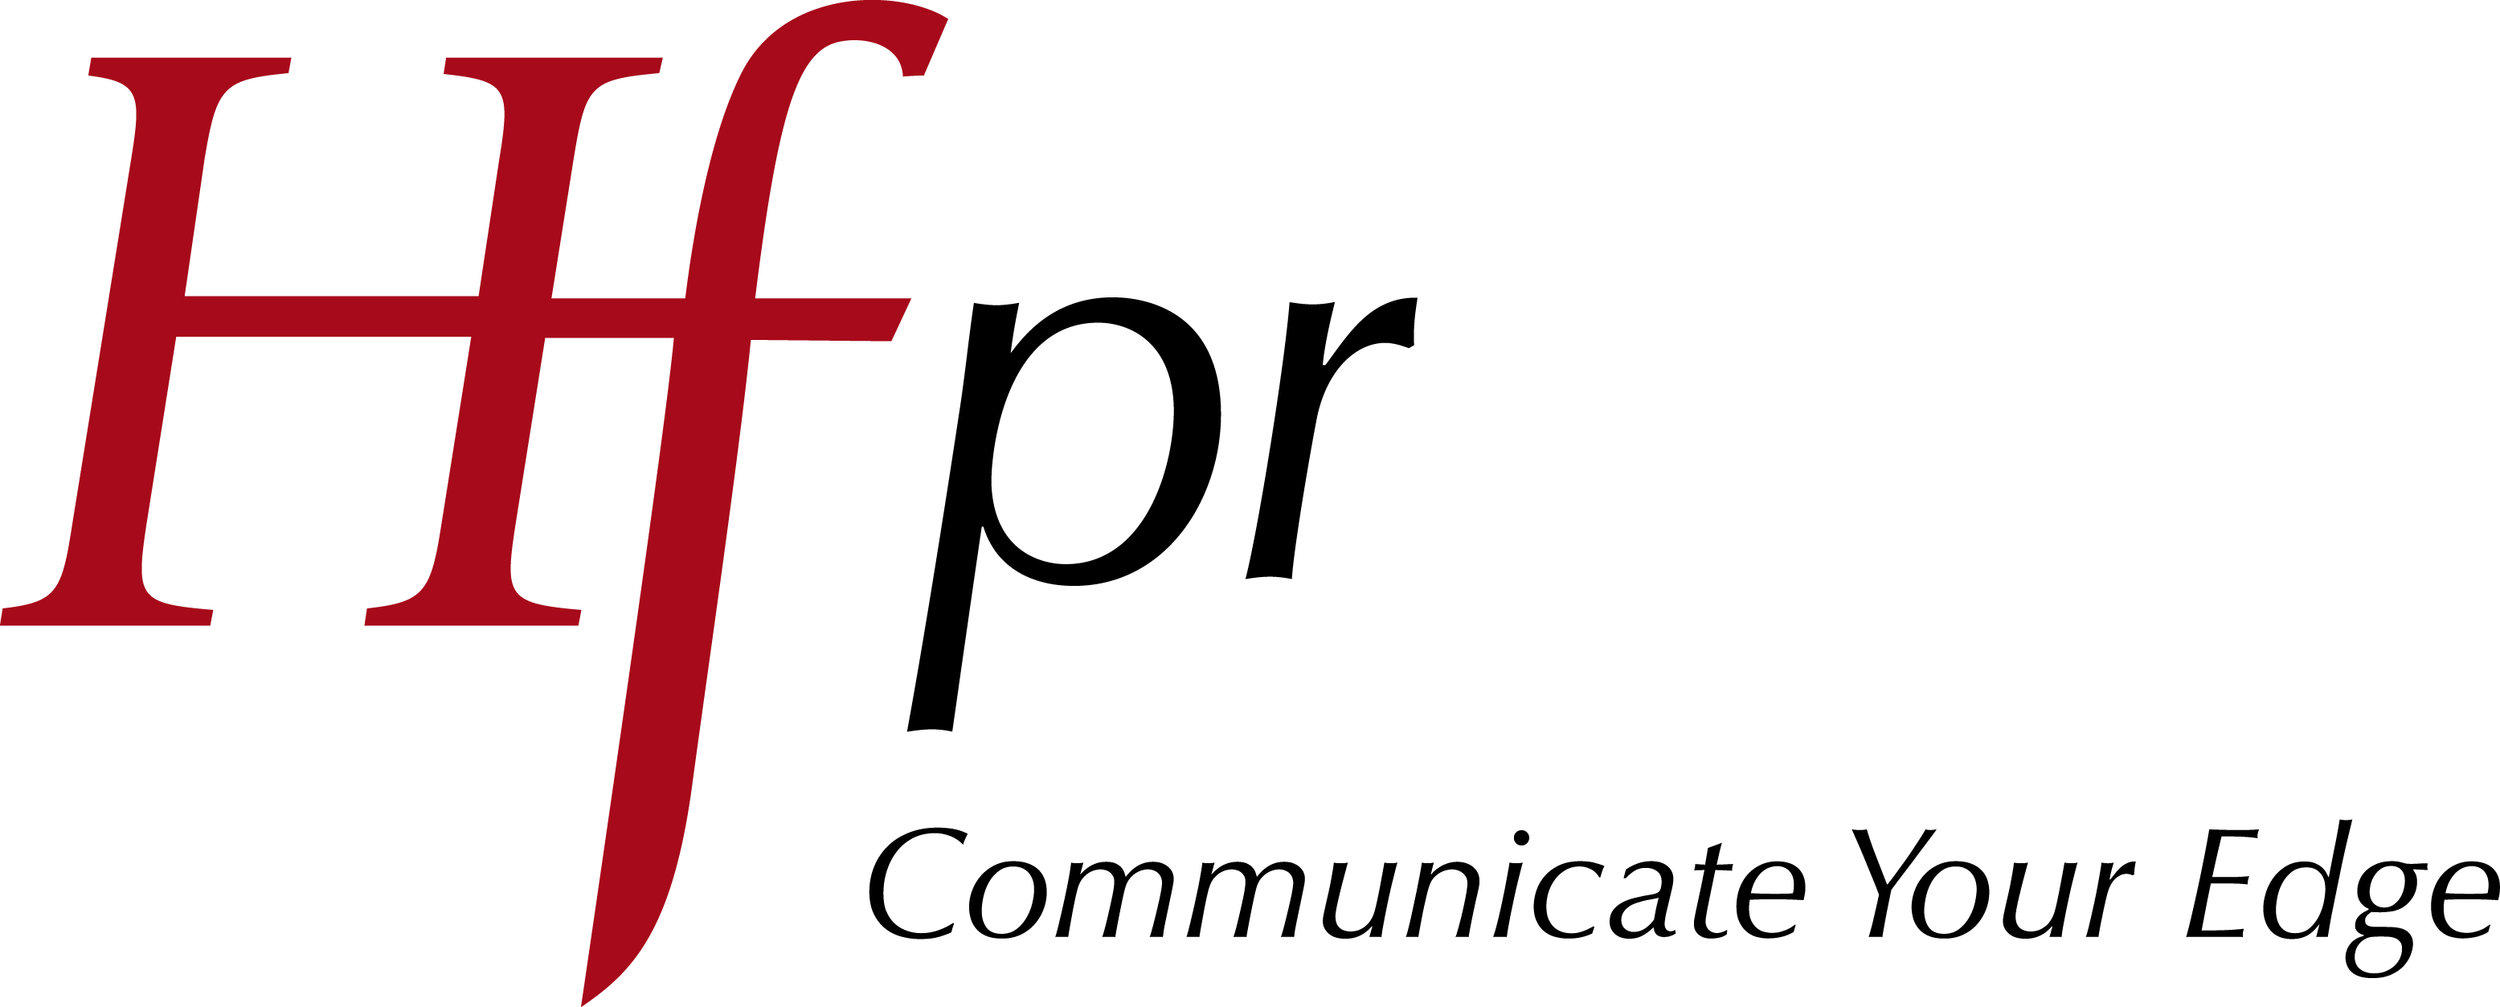 hf_pr_logo.jpg